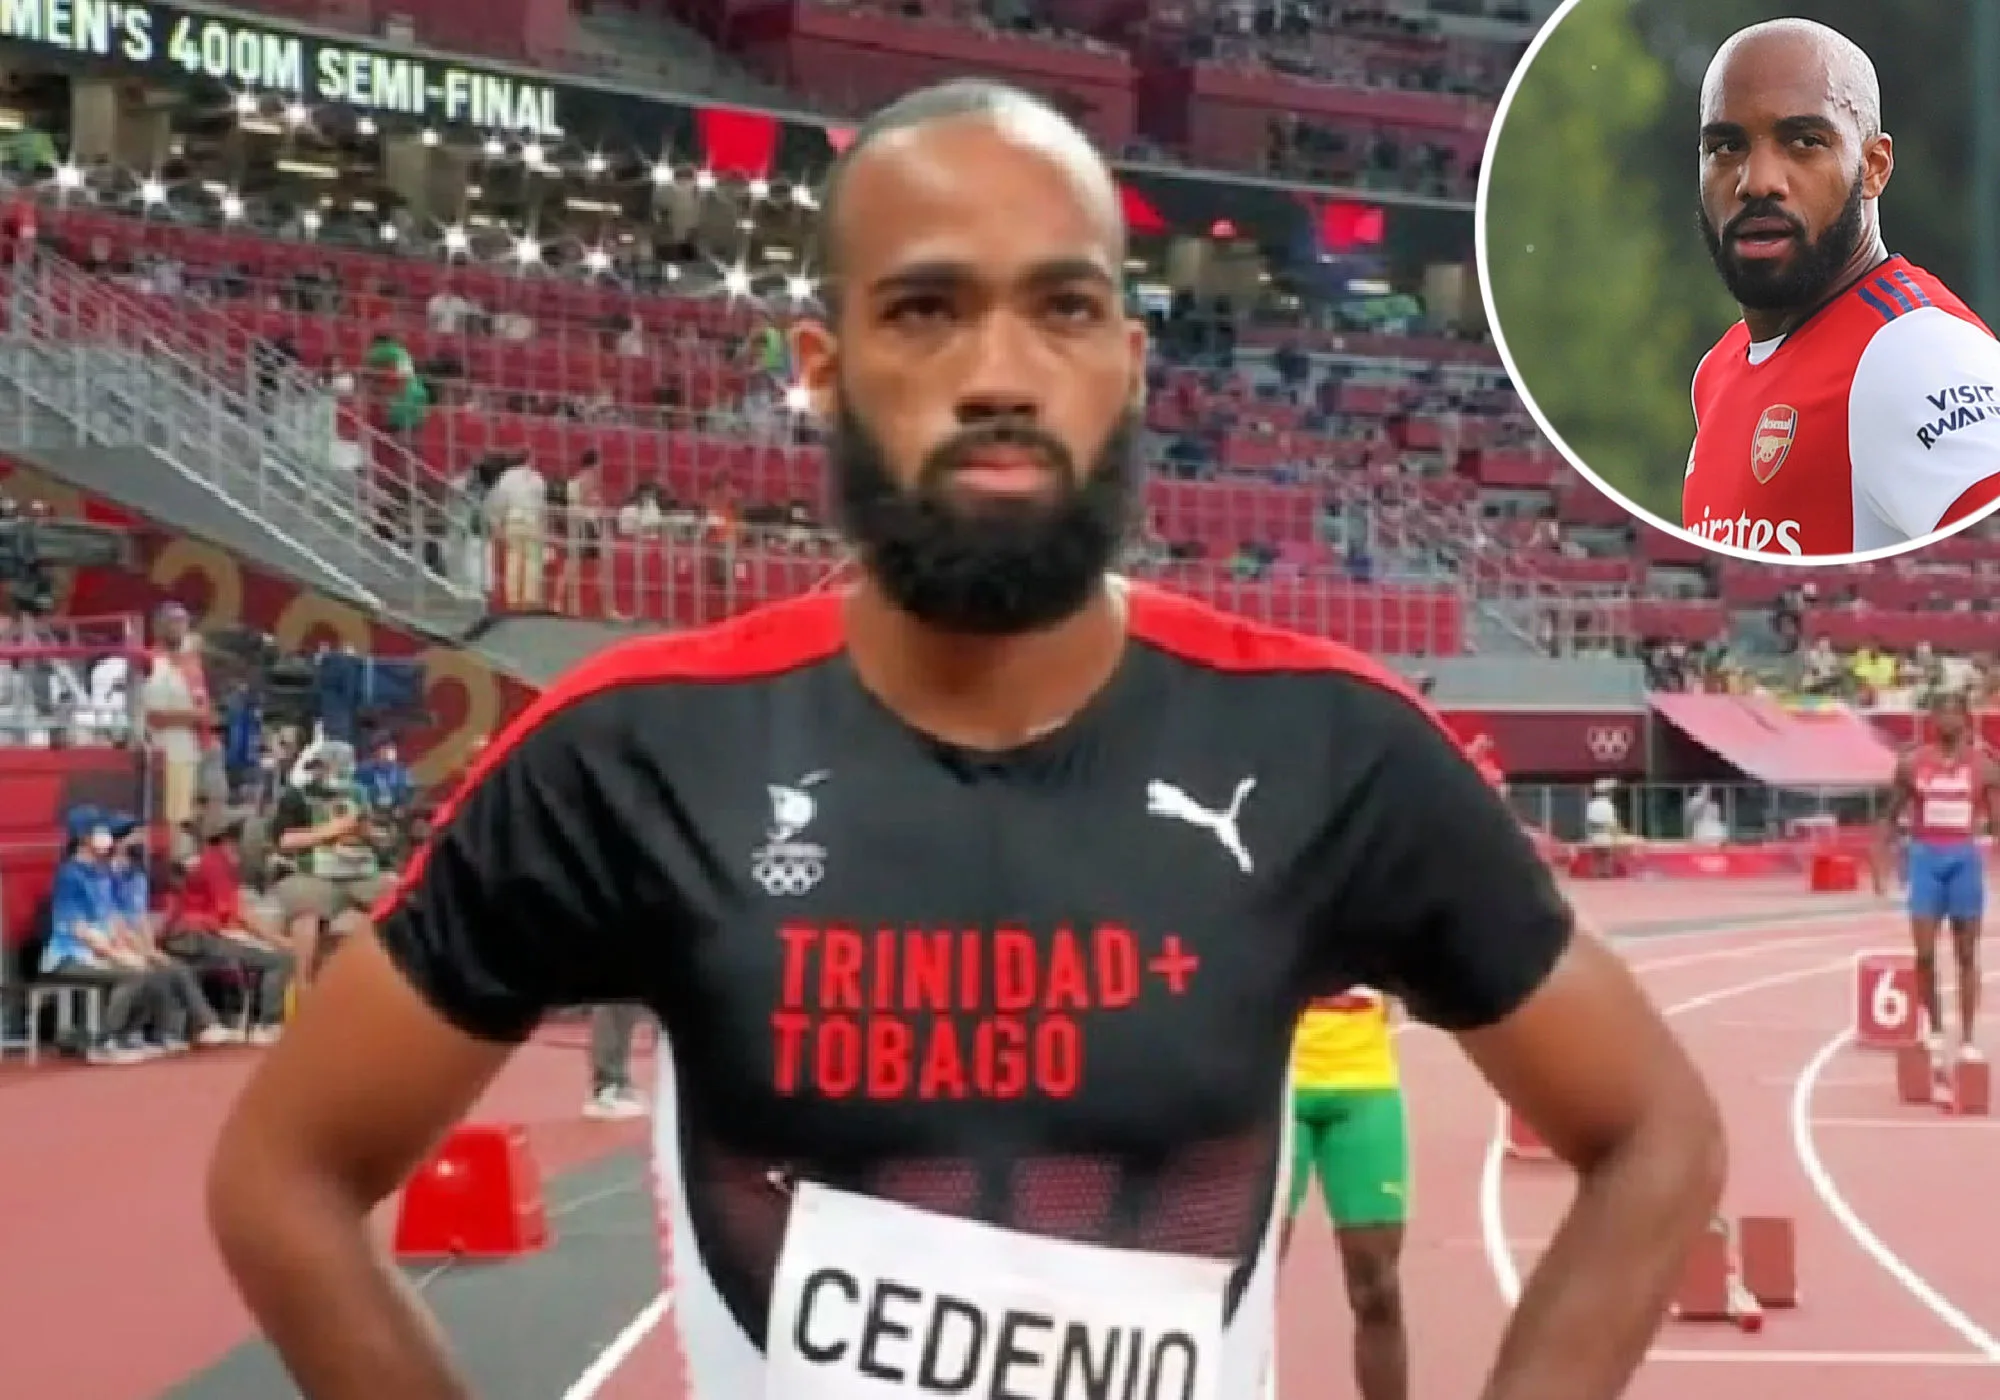 Trinidad & Tobago athlete Machel Cedenio is a spitting image of Alexandre Lacazette